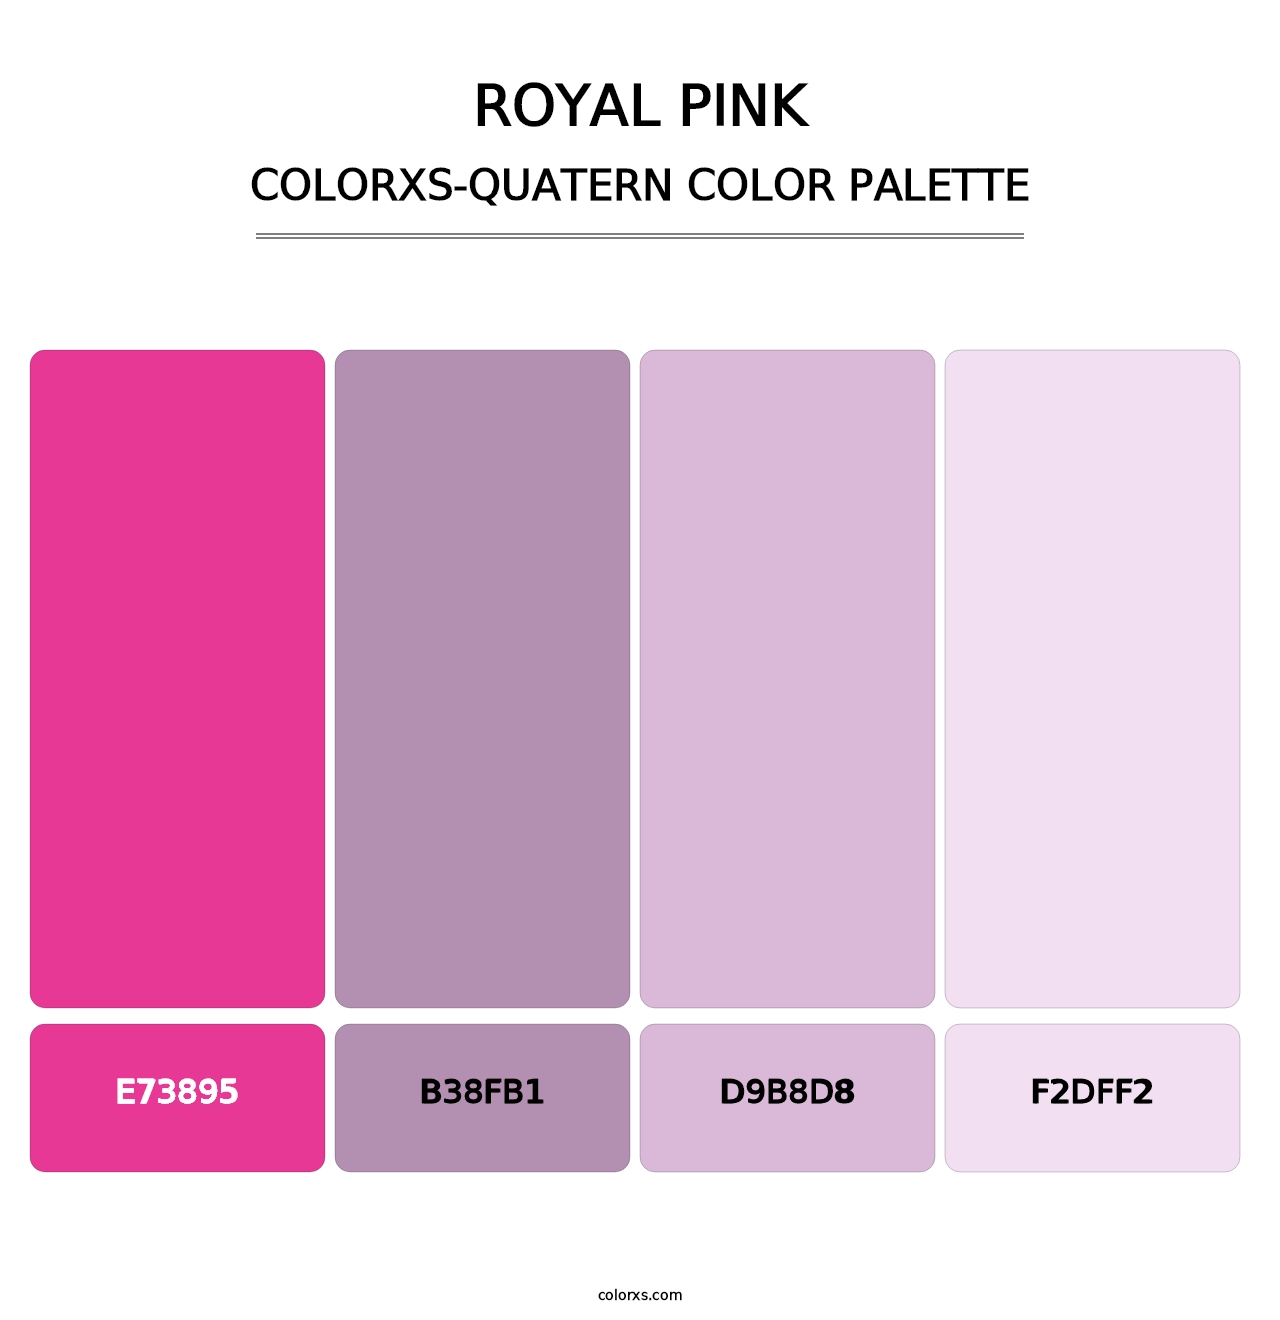 Royal Pink - Colorxs Quatern Palette